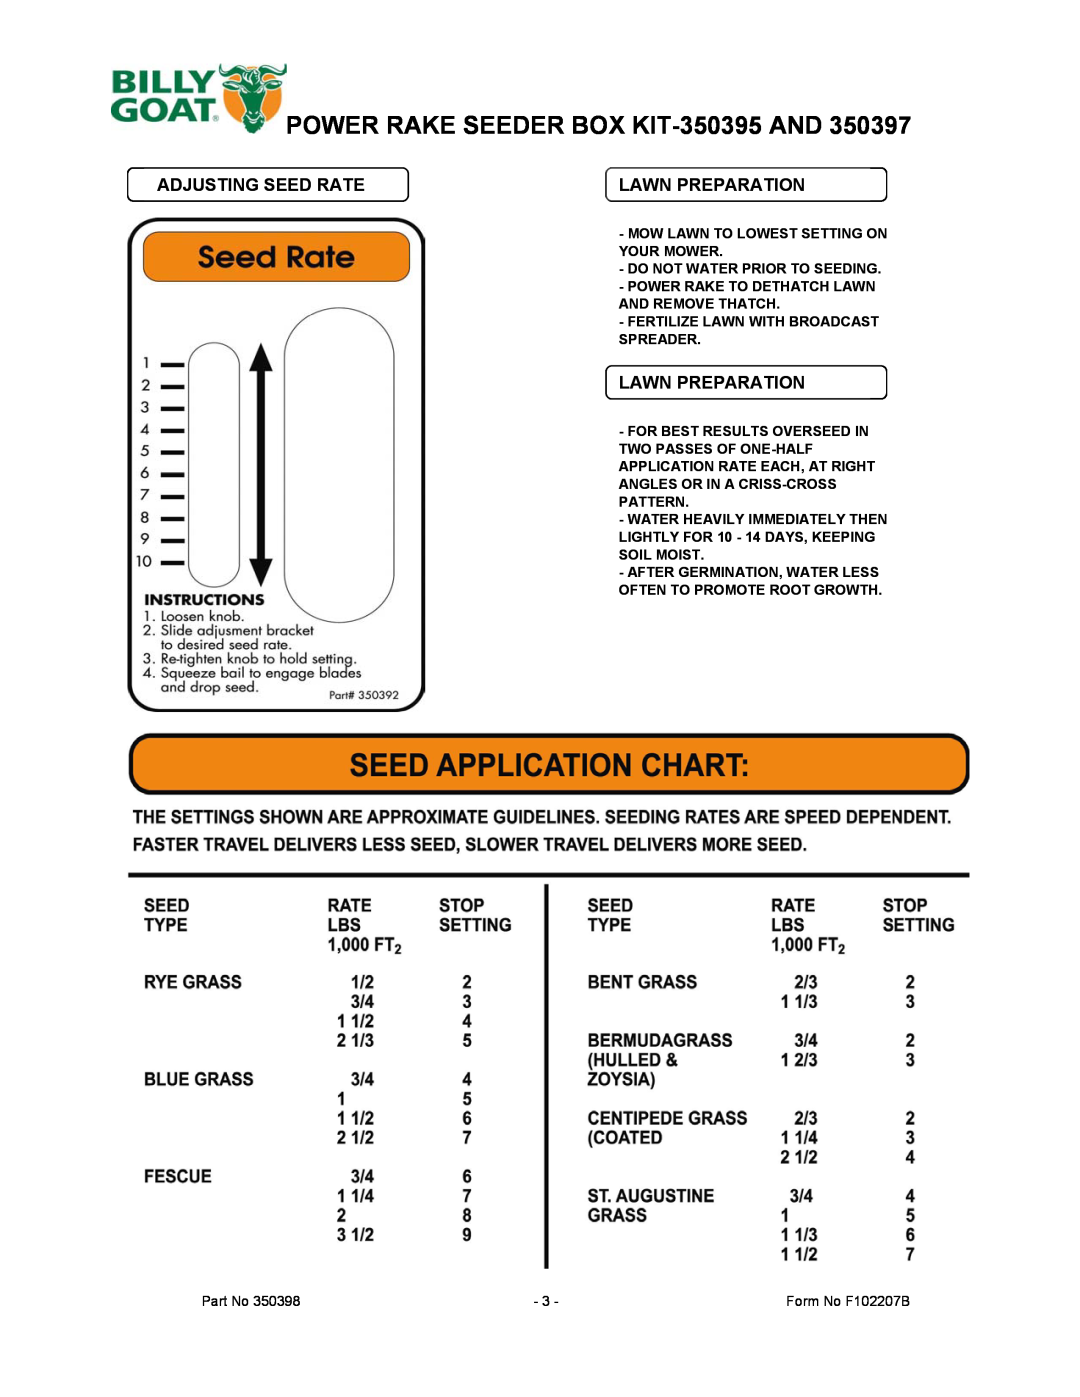 Billy Goat 350397 manual POWER RAKE SEEDER BOX KIT-350395AND, Adjusting Seed Rate, Lawn Preparation 